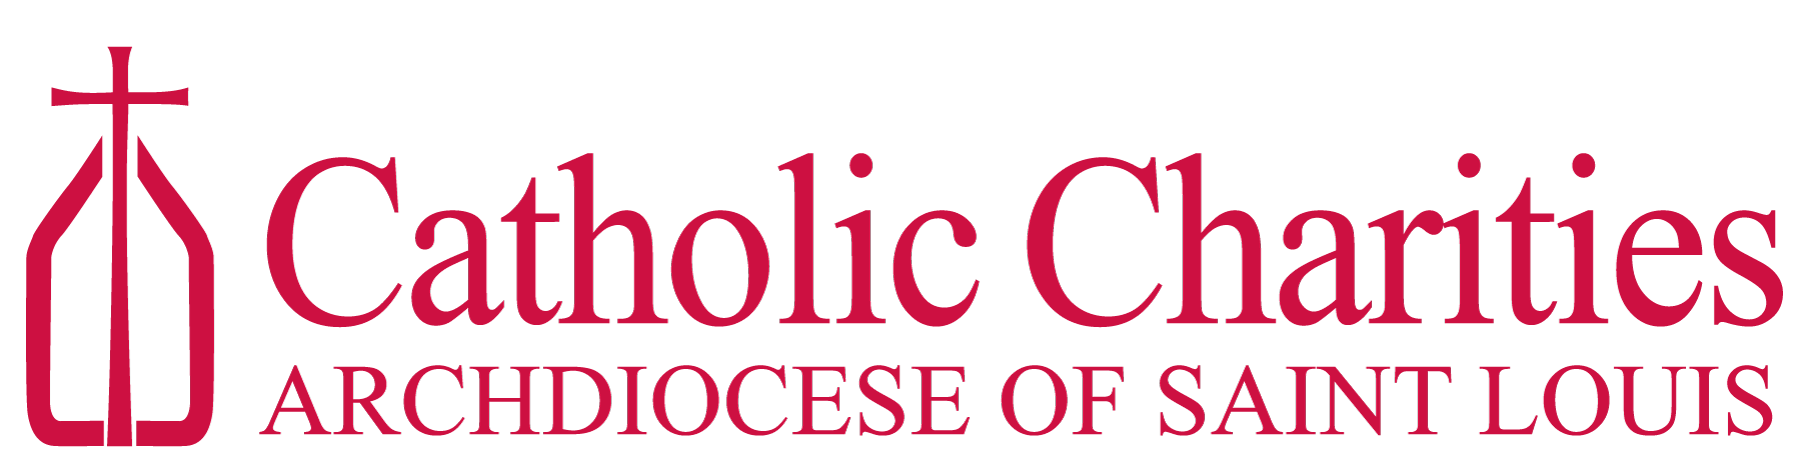 Catholic-Charities STL logo.png